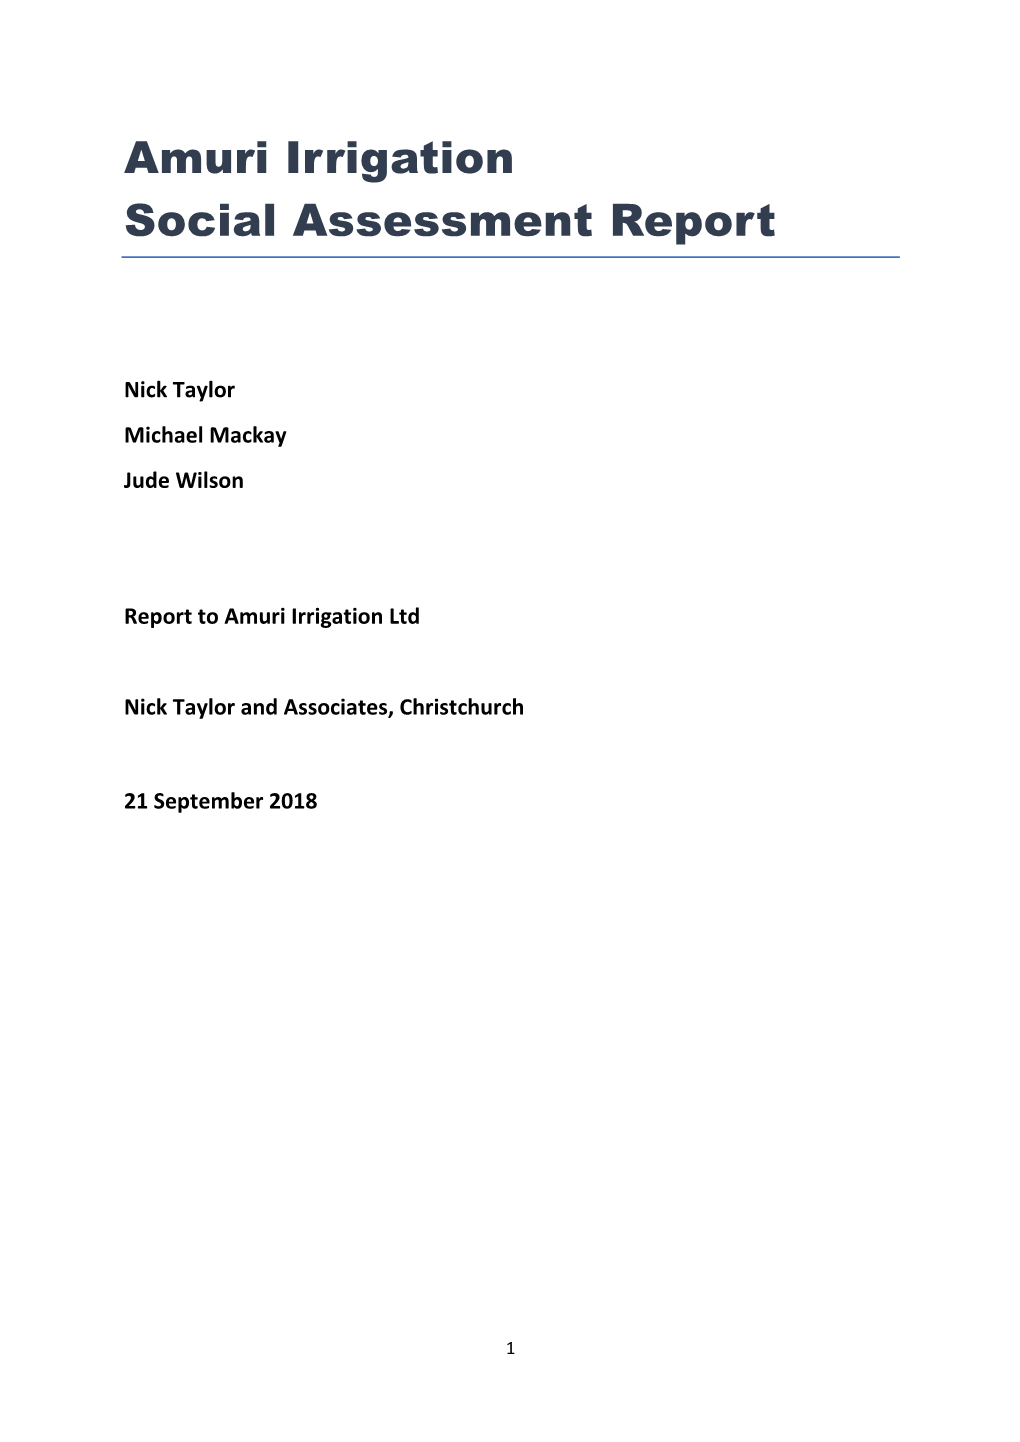 Amuri Irrigation Social Assessment Report